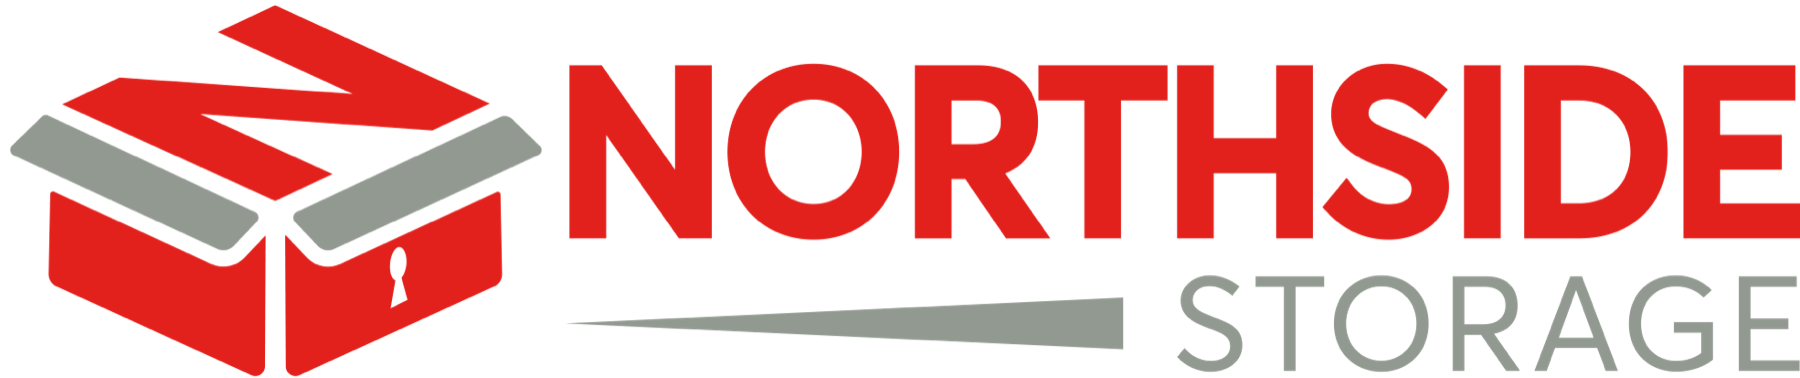 Logo for Northside Storage, click to go home